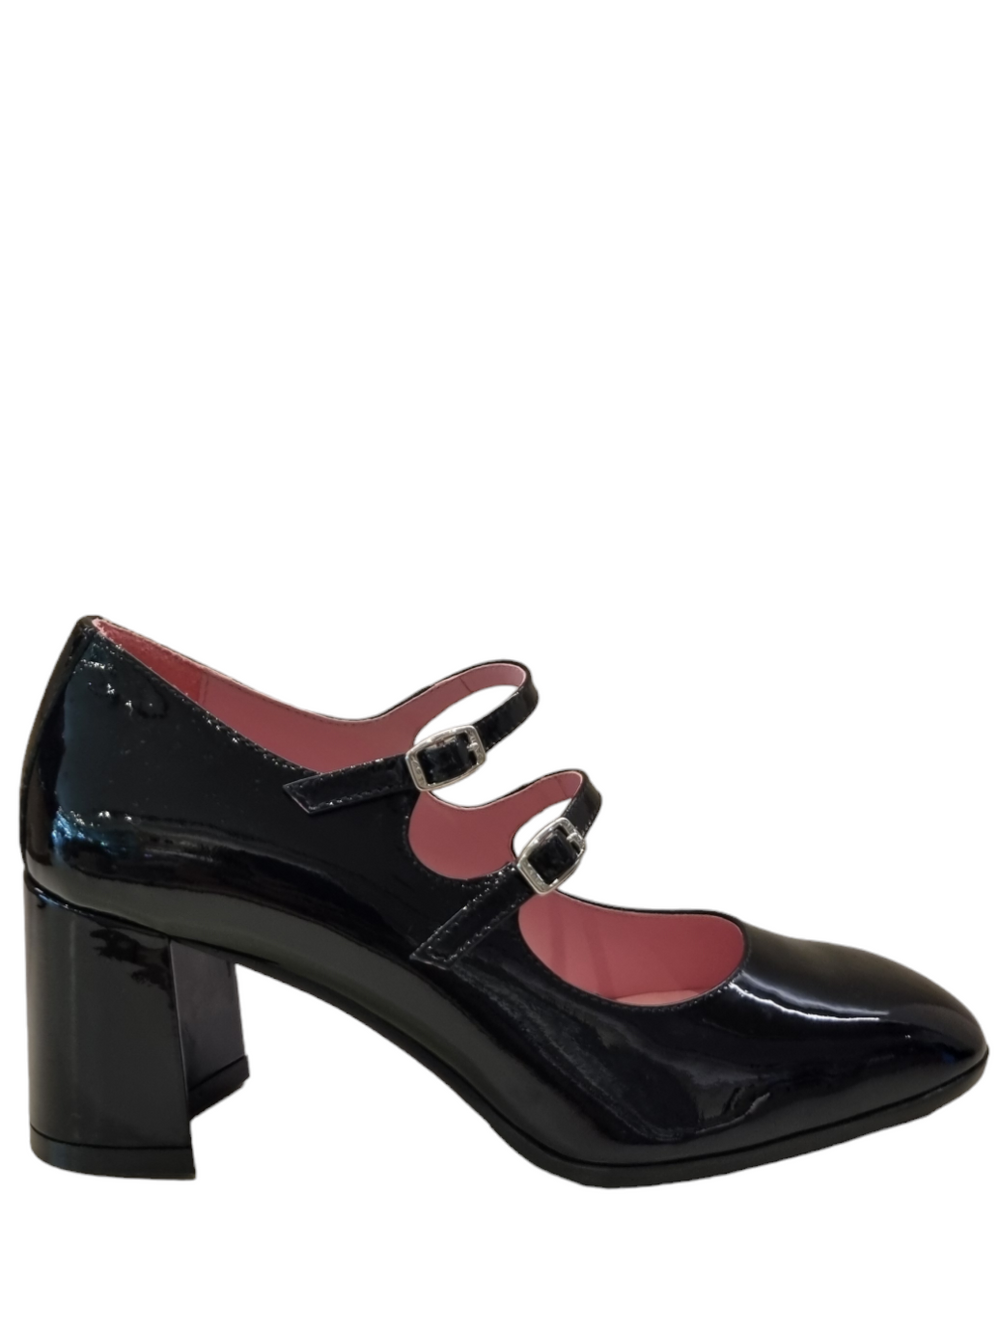 Alice Black Patent Leather Mary Jane - Carel Paris - Liberty Shoes Australia